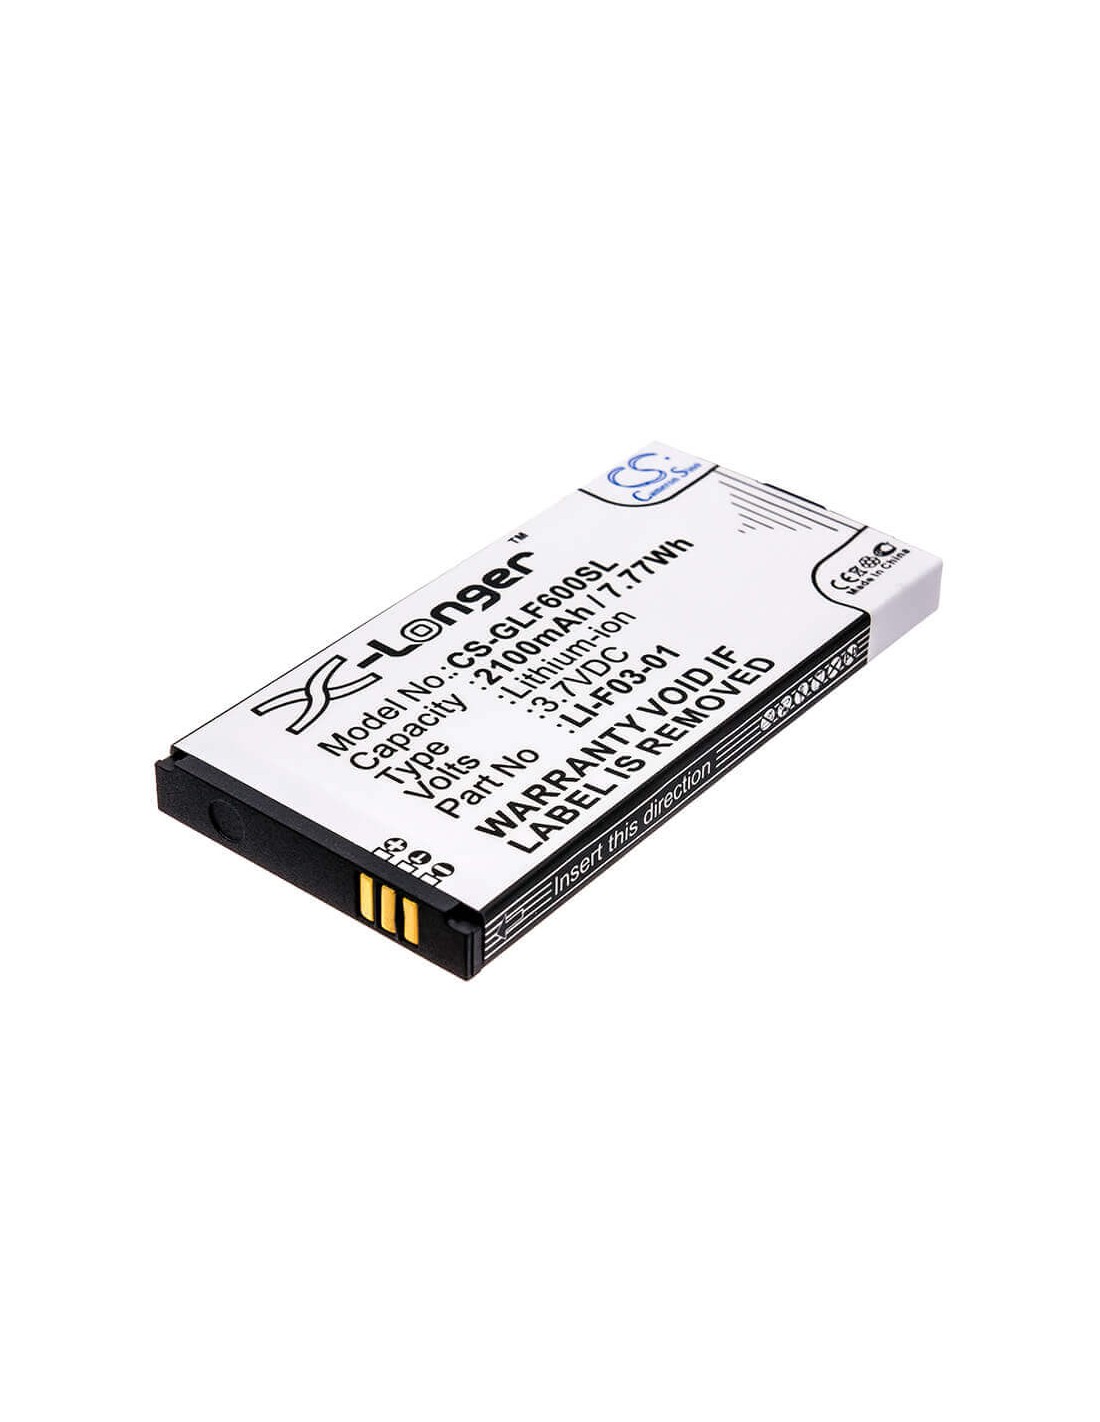 Battery for Golf Buddy Dsc-gb600, Gb3-pt4, Platinum 4 3.7V, 2100mAh - 7.77Wh